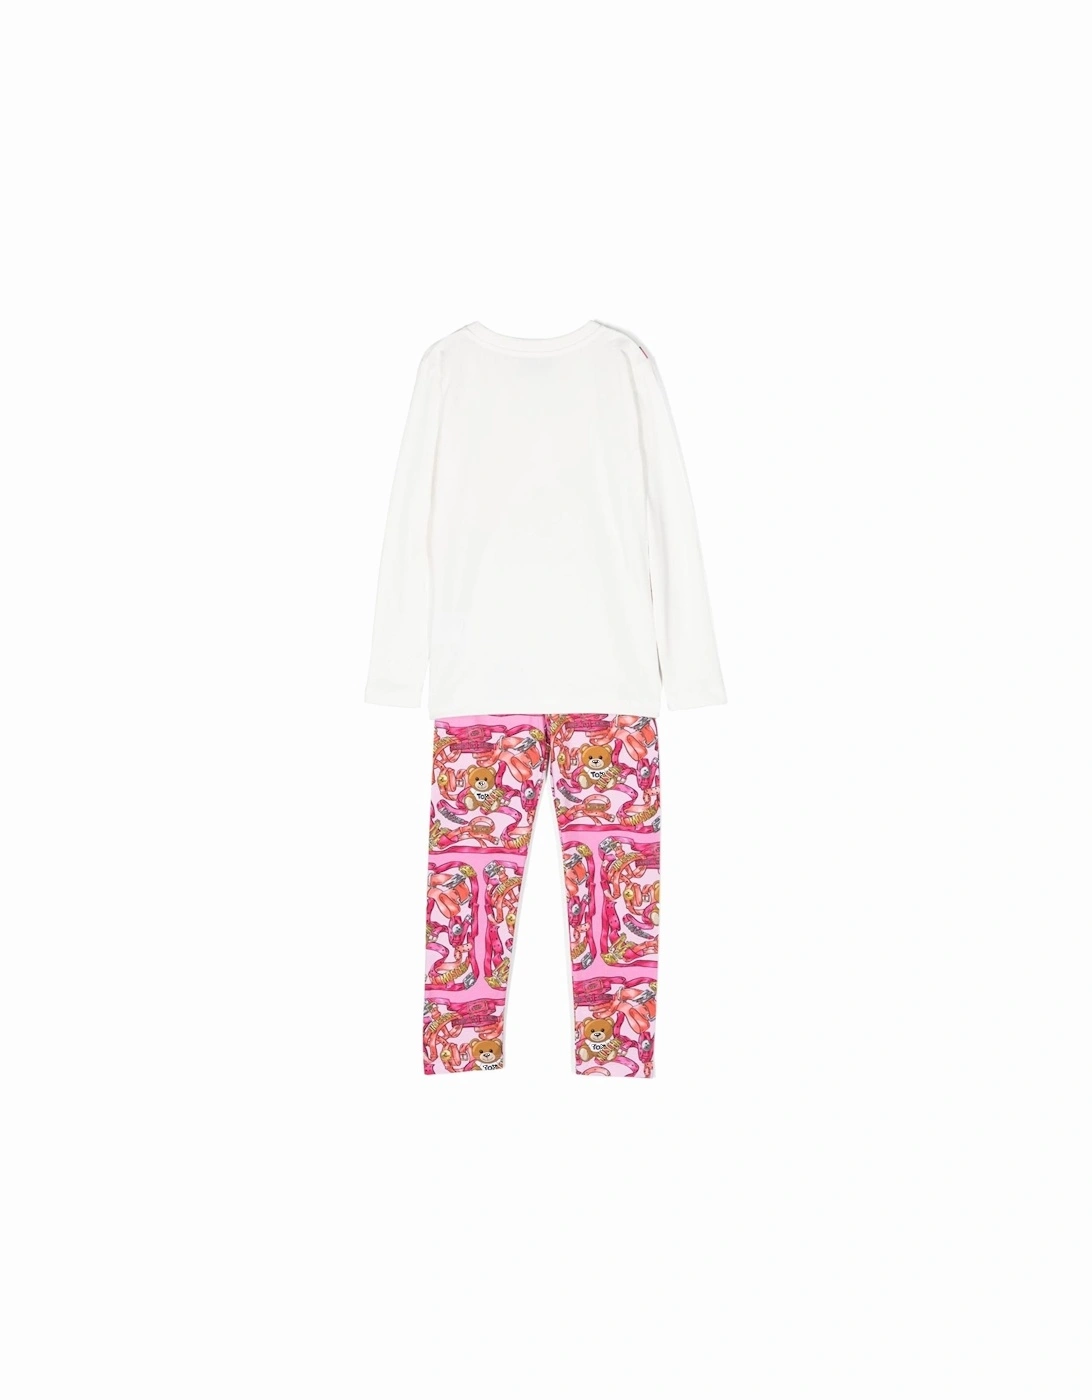 Girls T-shirt and Leggings Set in Pink / White